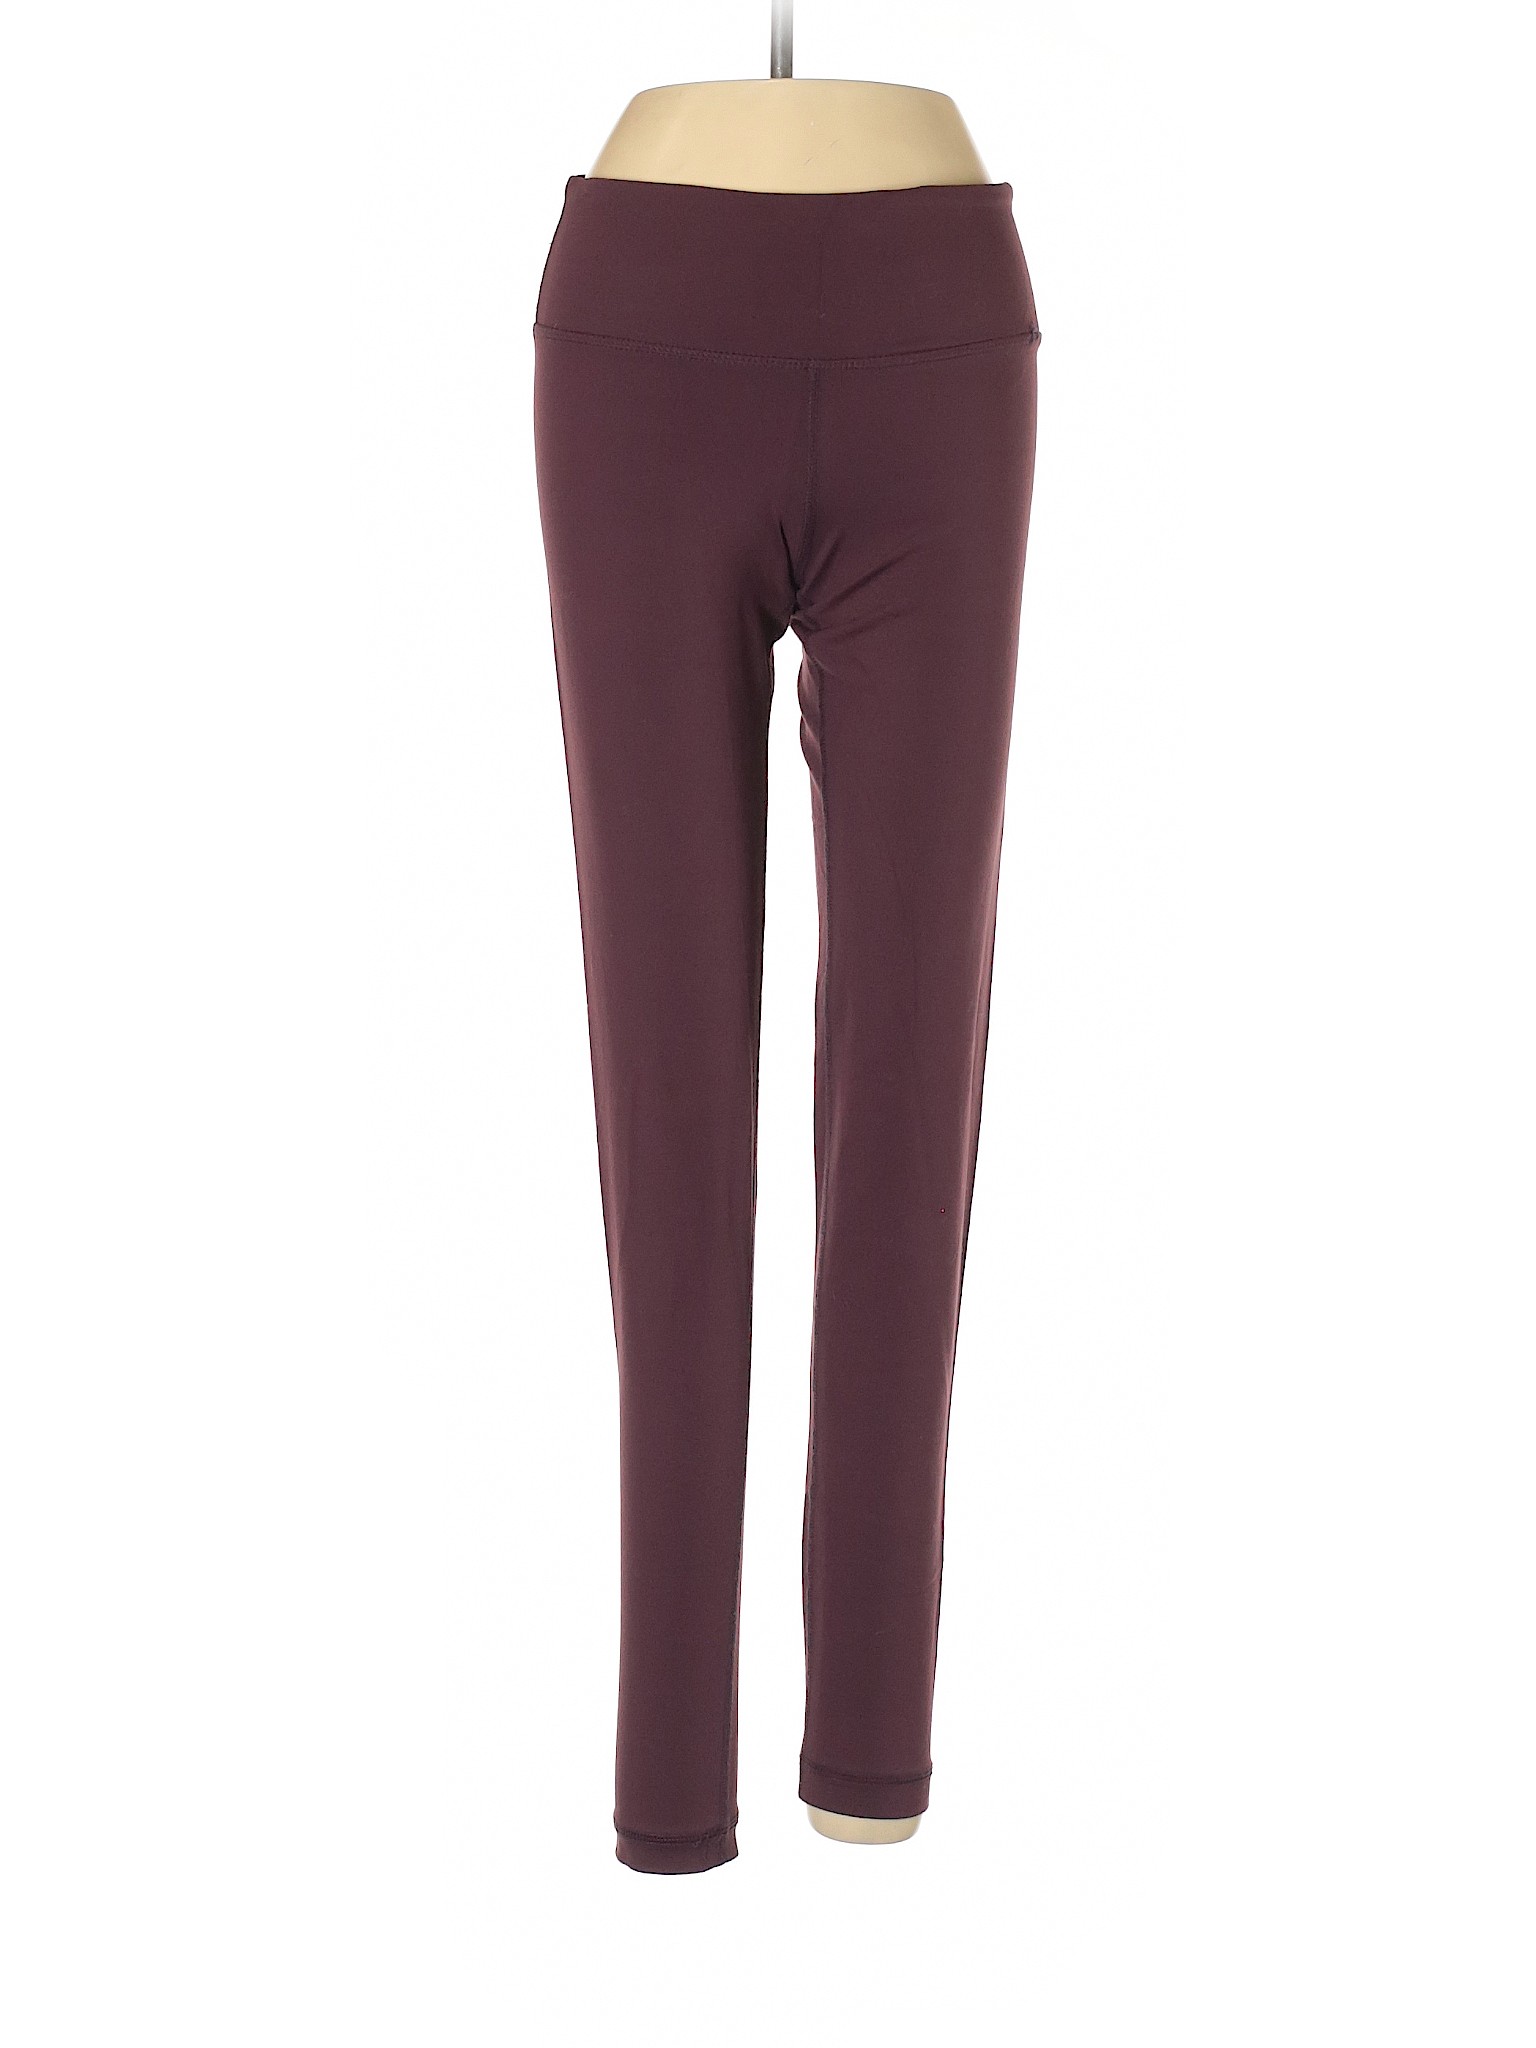 RBX Women Purple Active Pants XS | eBay